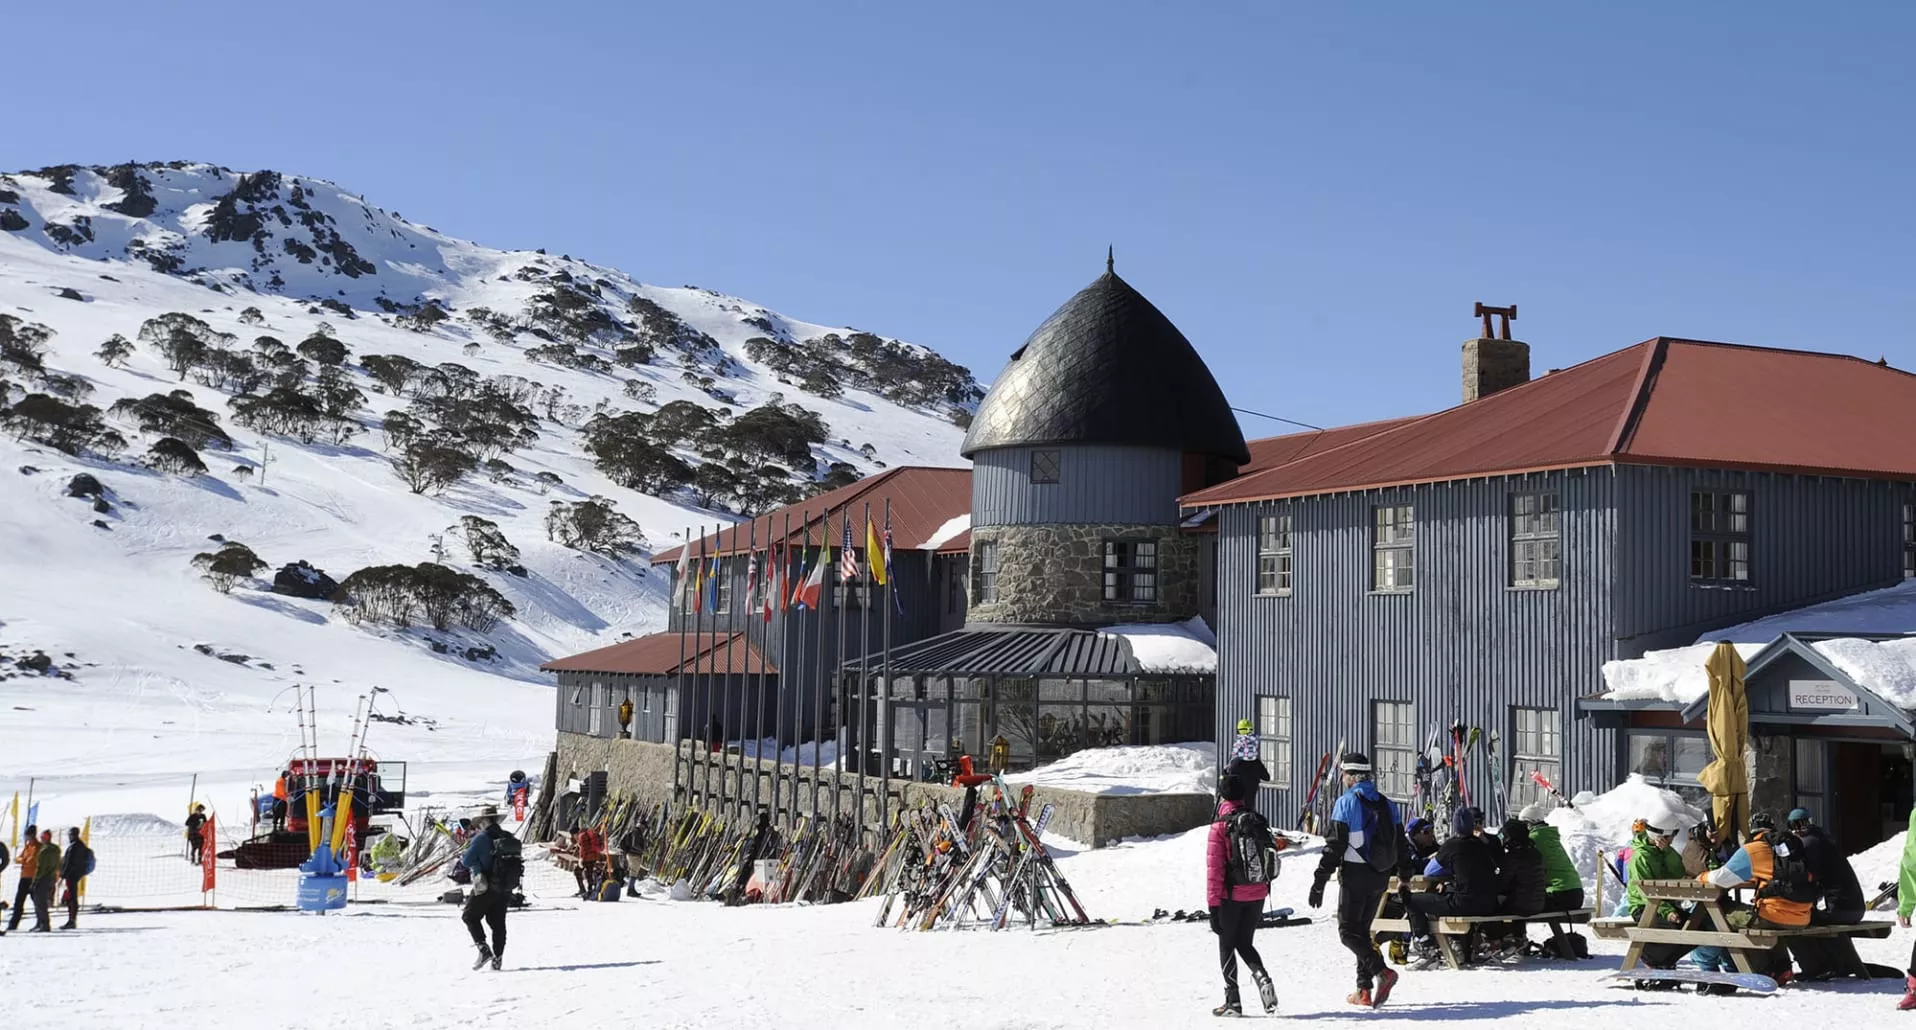 Charlotte Pass Snow Resort in Australia, Australia and Oceania | Snowboarding,Skiing - Rated 0.8